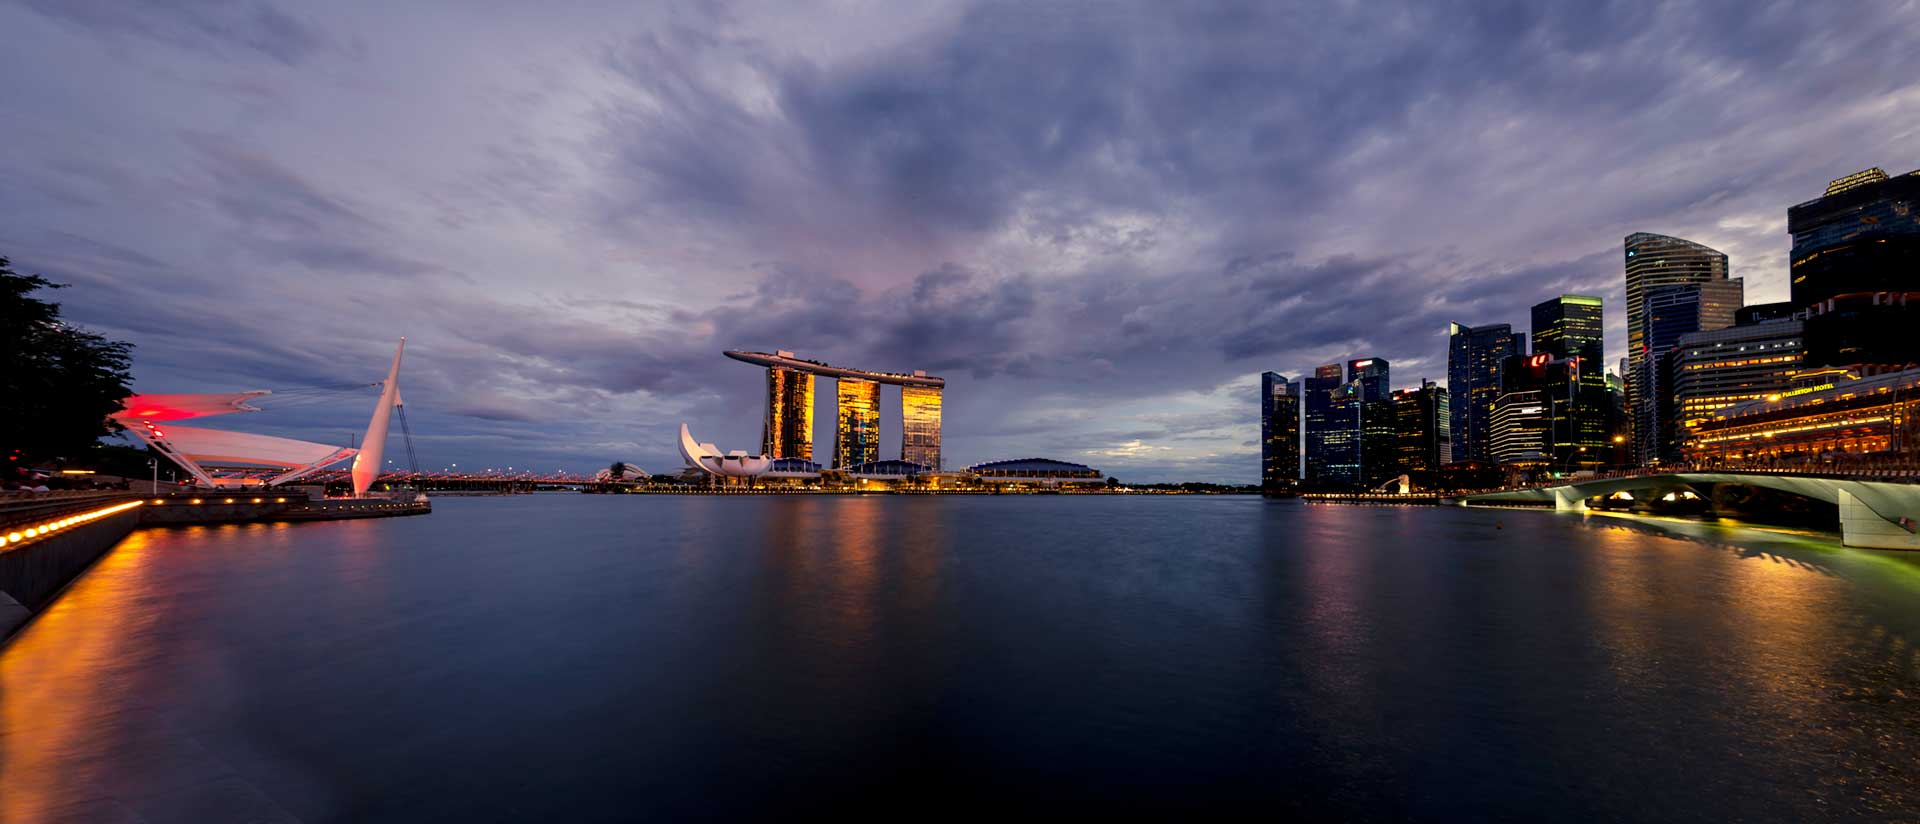 Marina Bay Sands at dusk Singapore